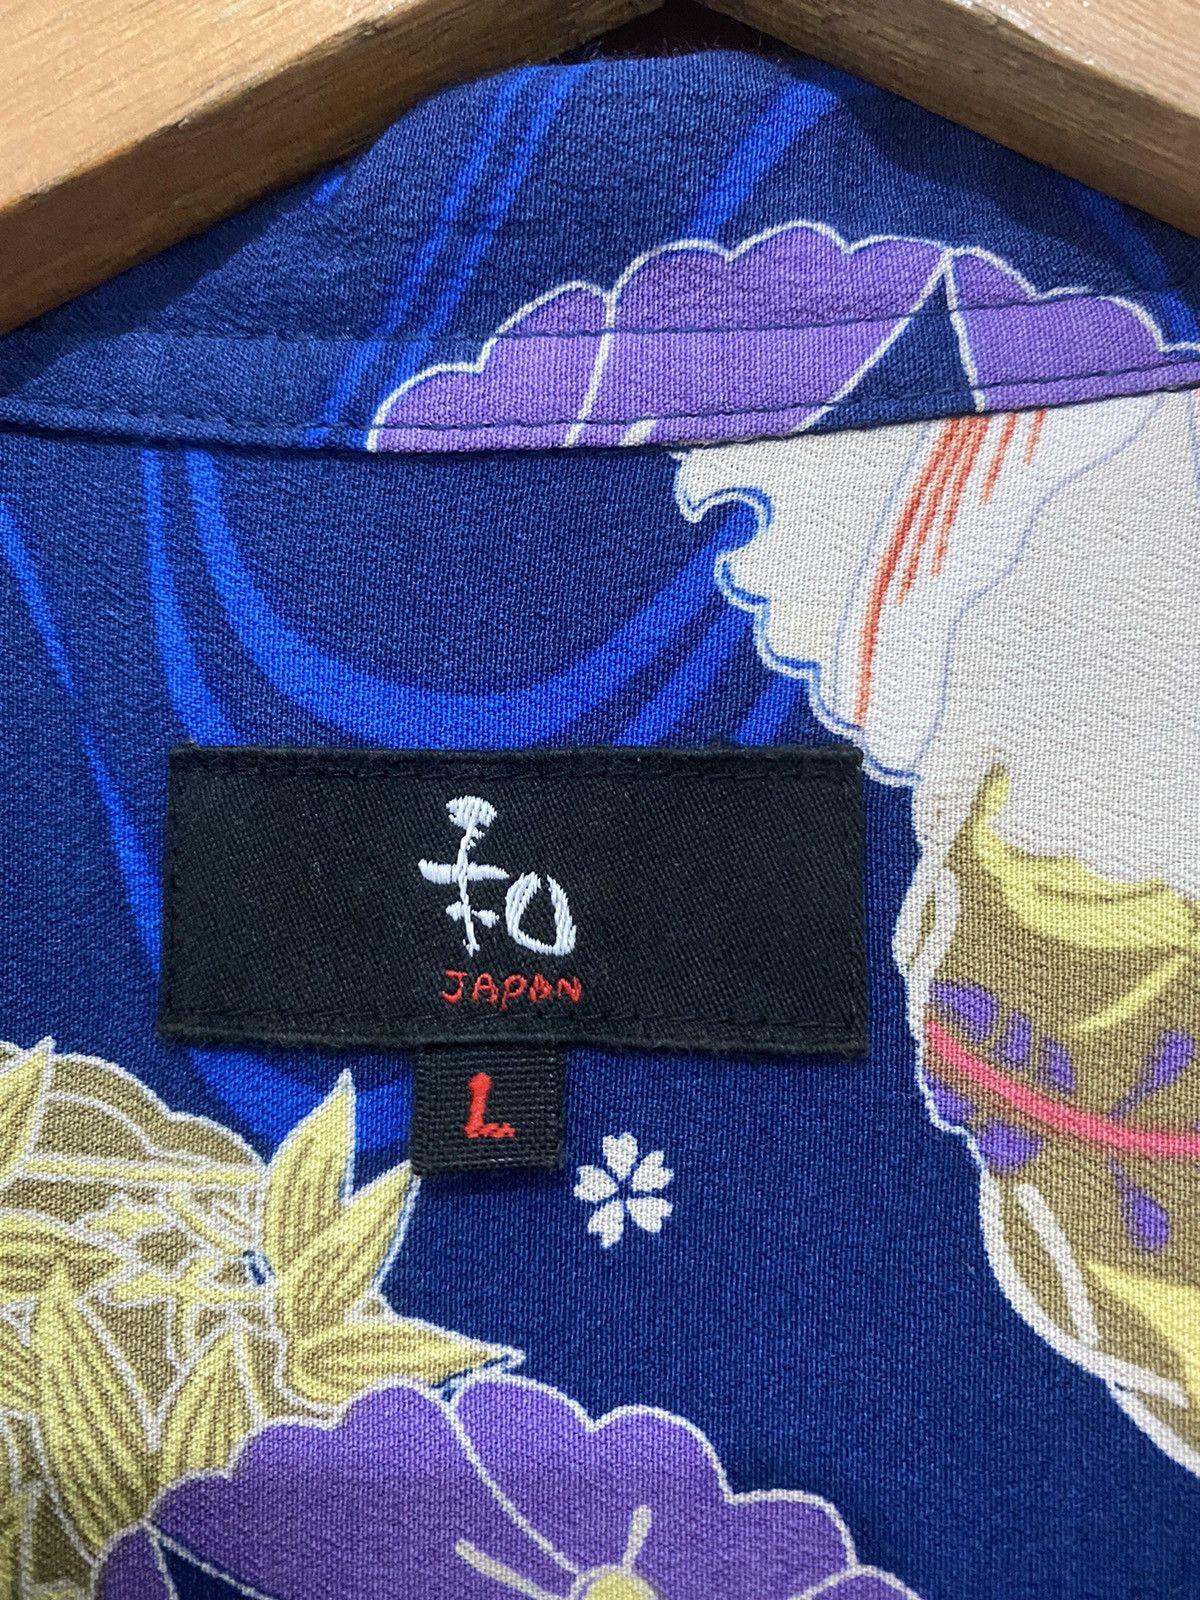 Rayon Japanese Brand Koi Fish Shirt Made Japan - 8